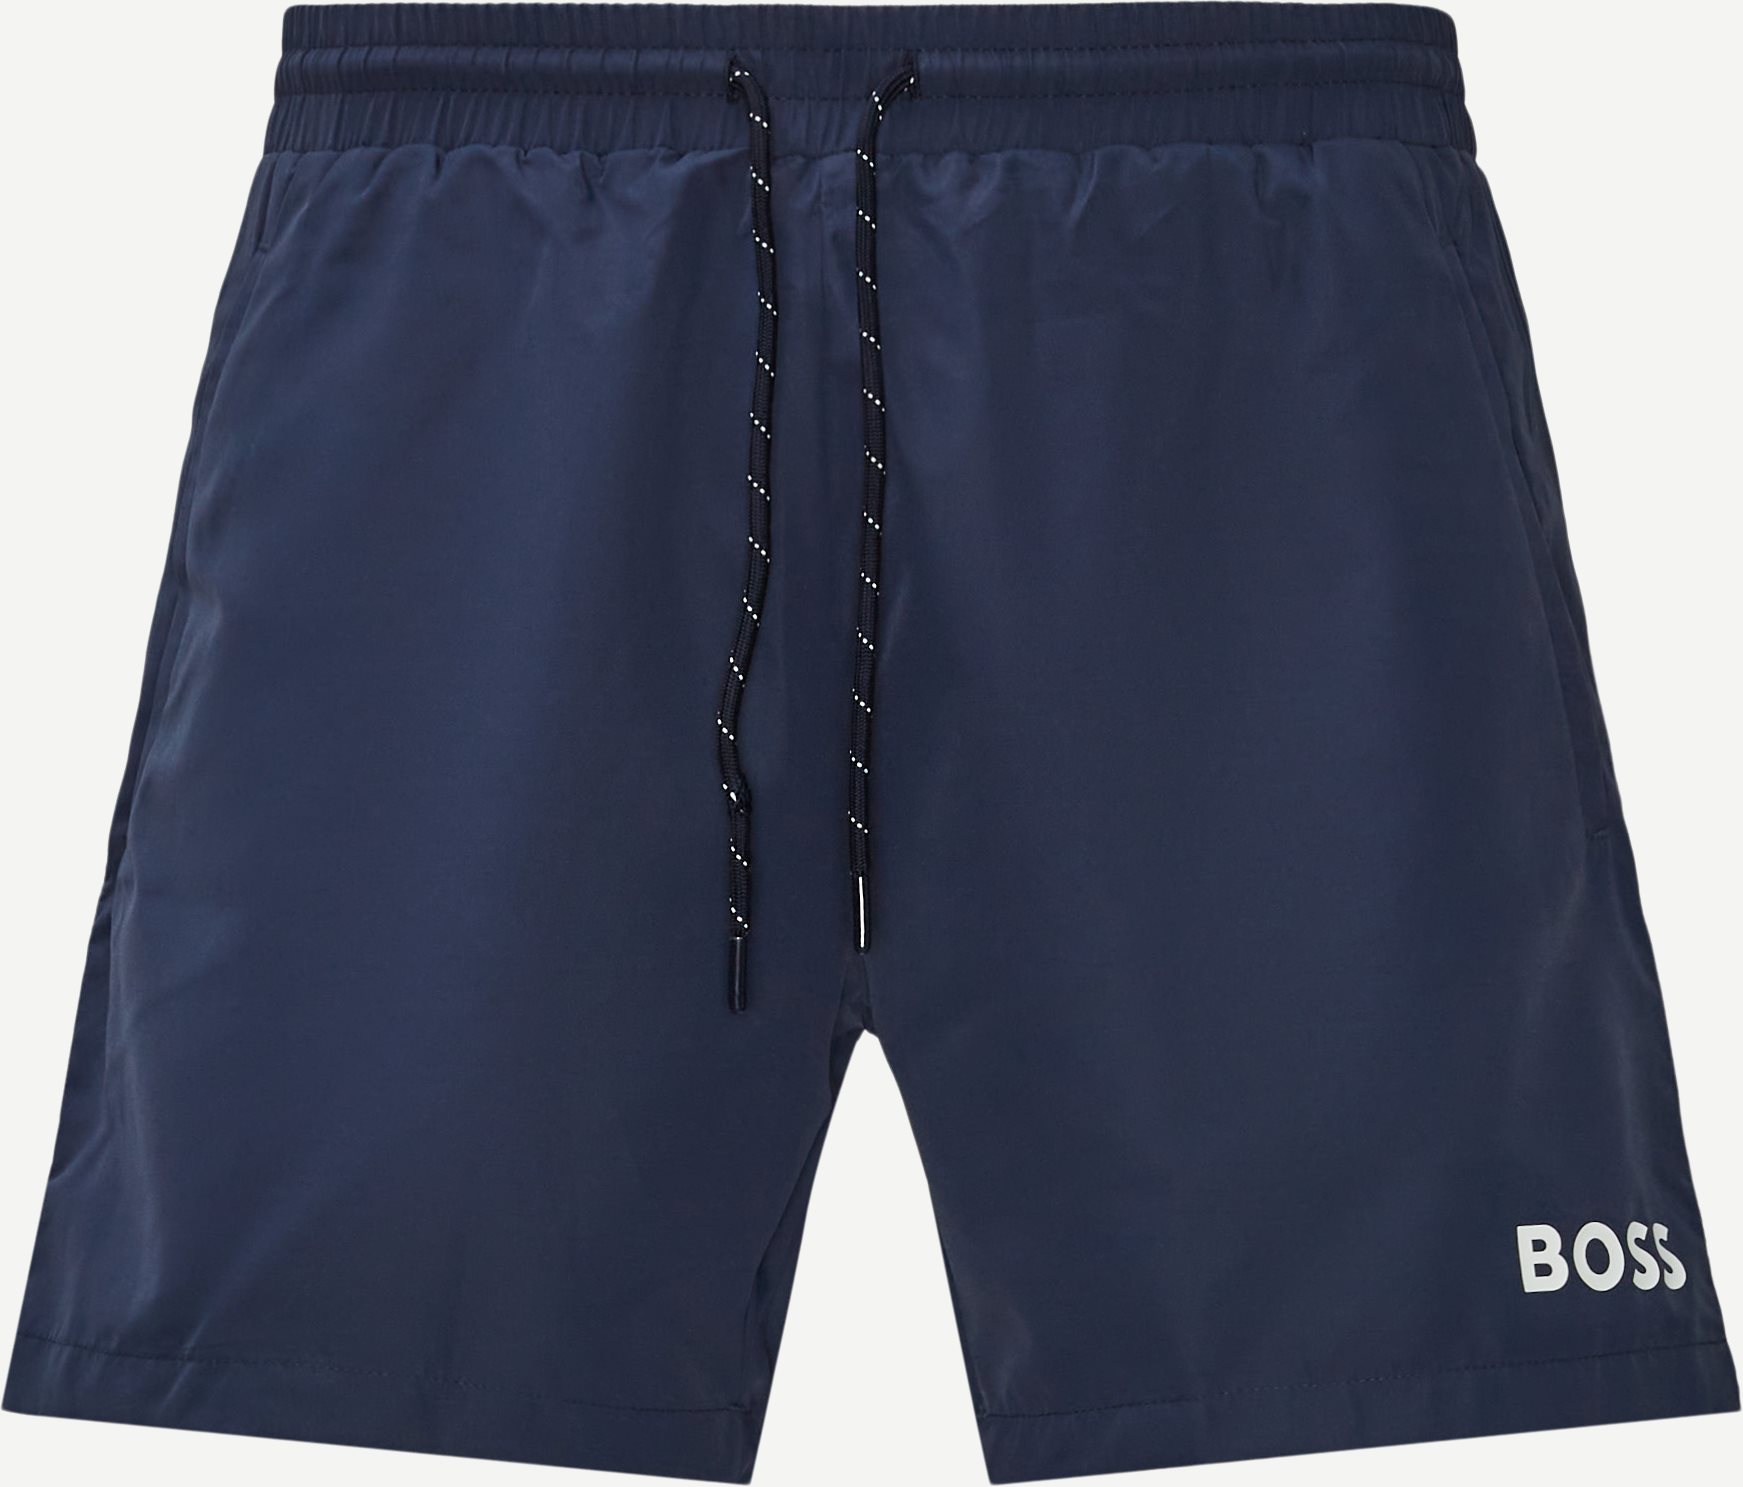 Shorts - Regular fit - Blau